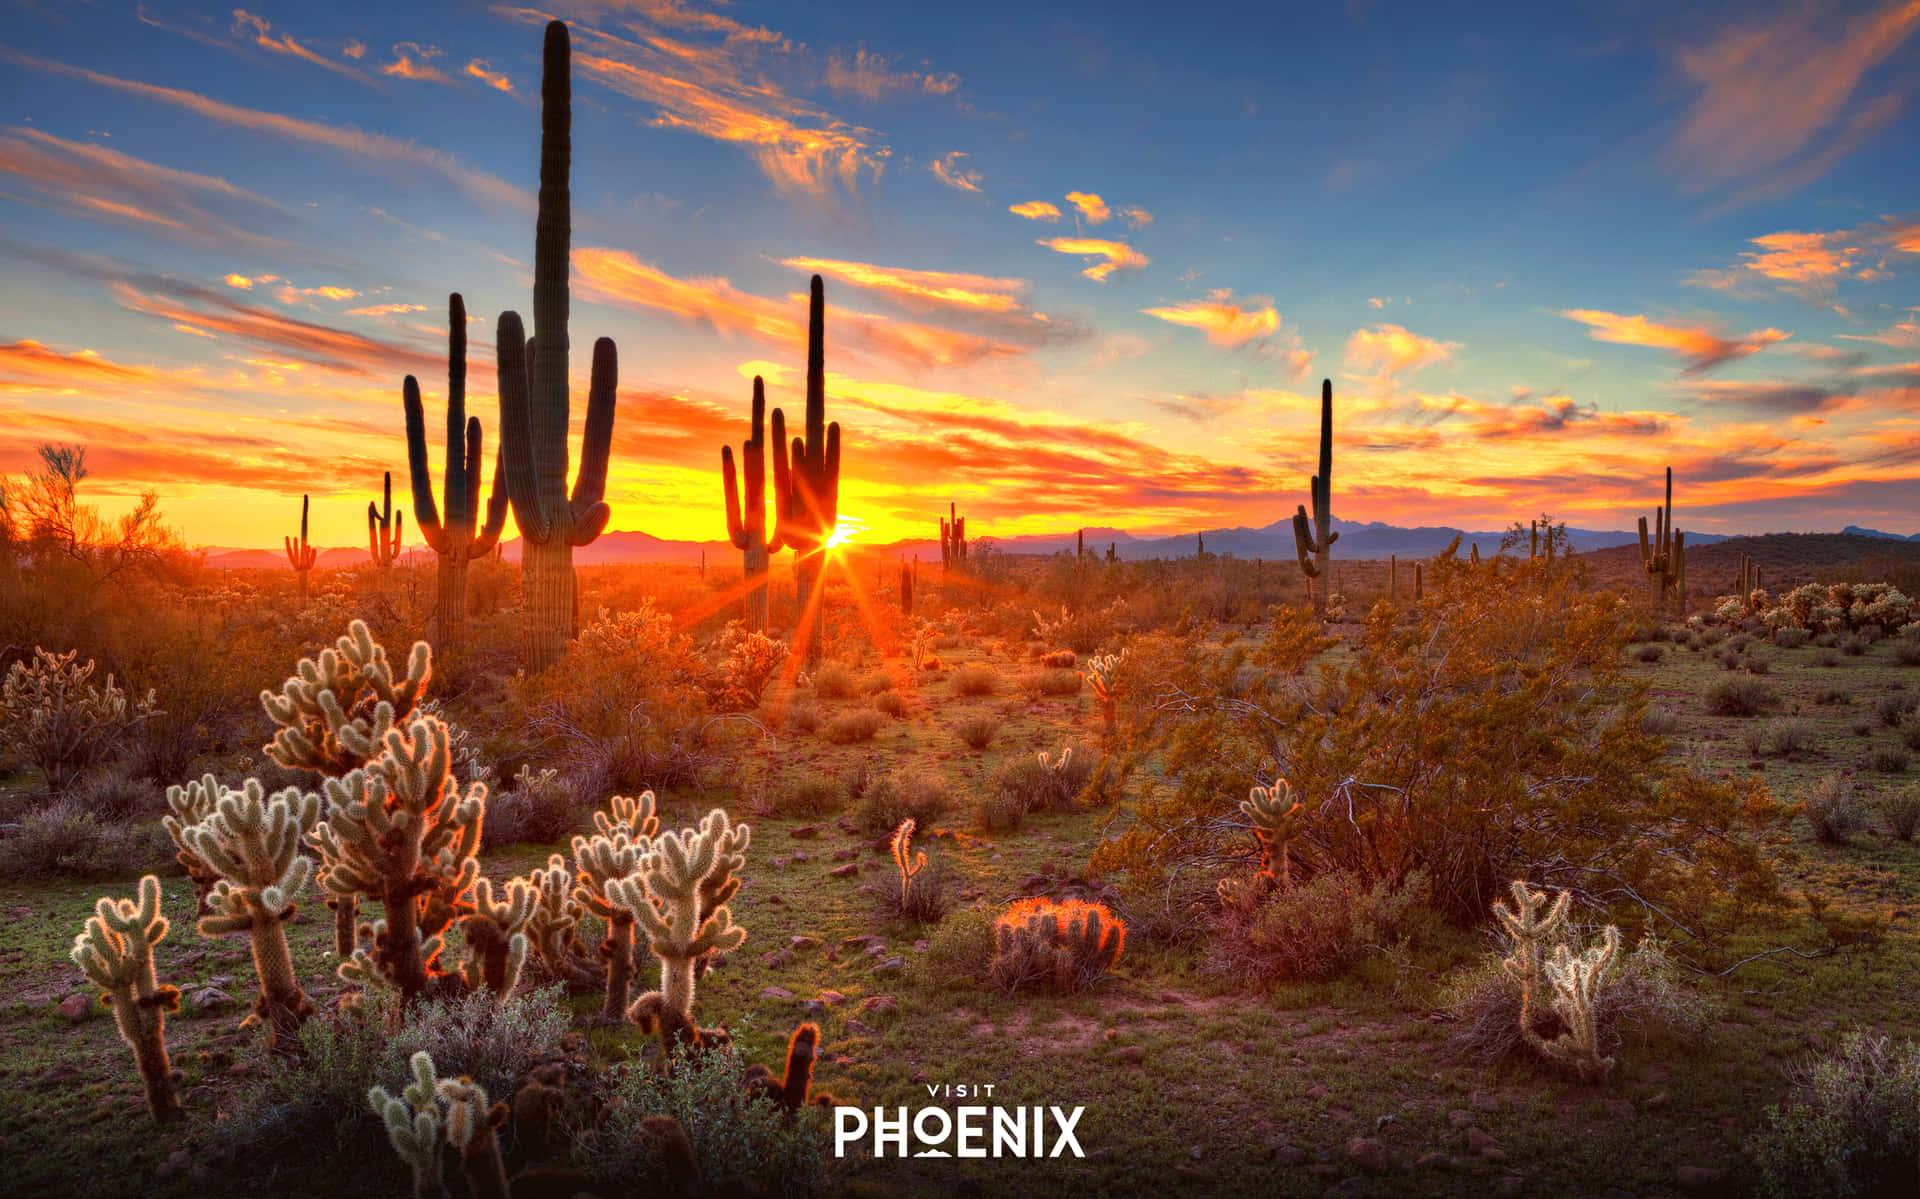 Download Image Phoenix Arizona Skyline at Sunset Wallpaper